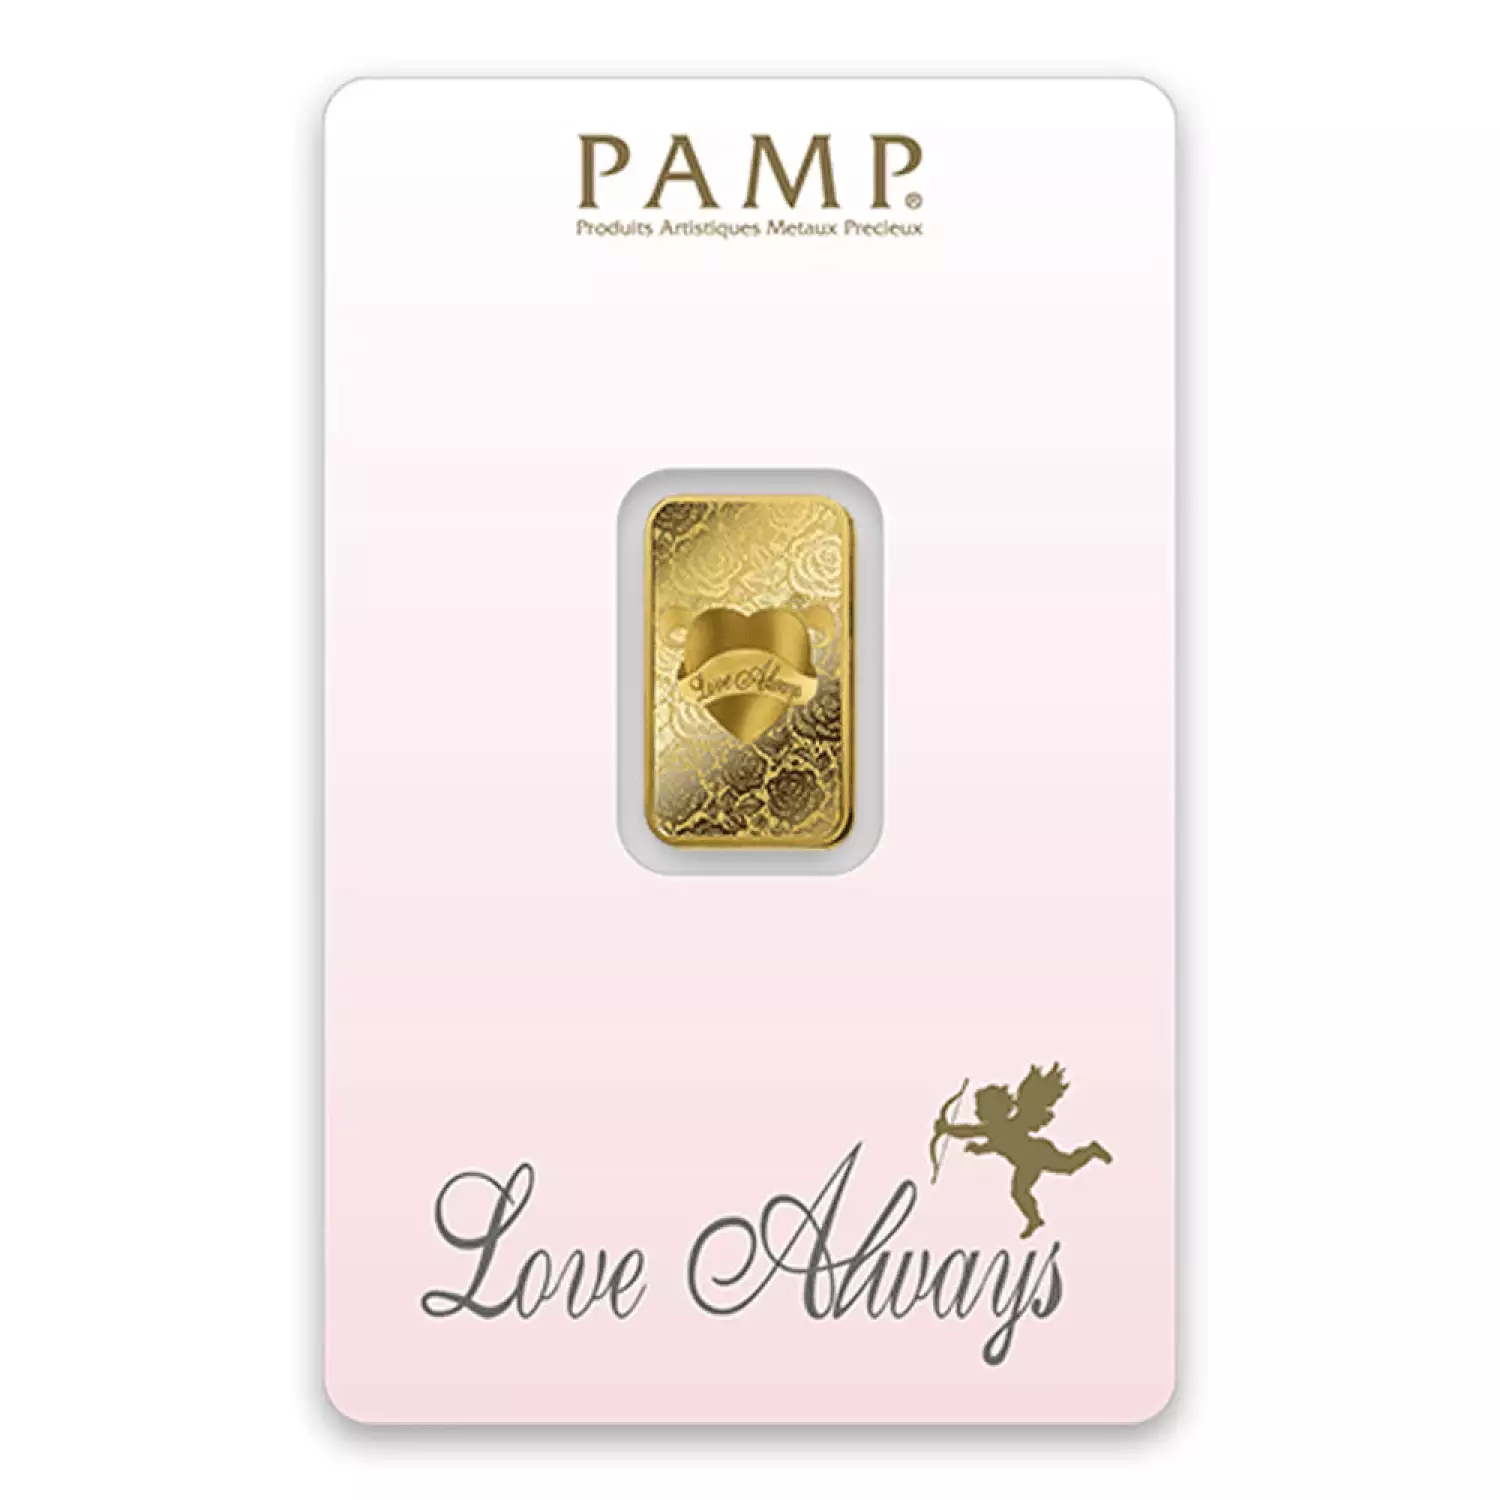 5g PAMP Gold Bar - Love Always (3)